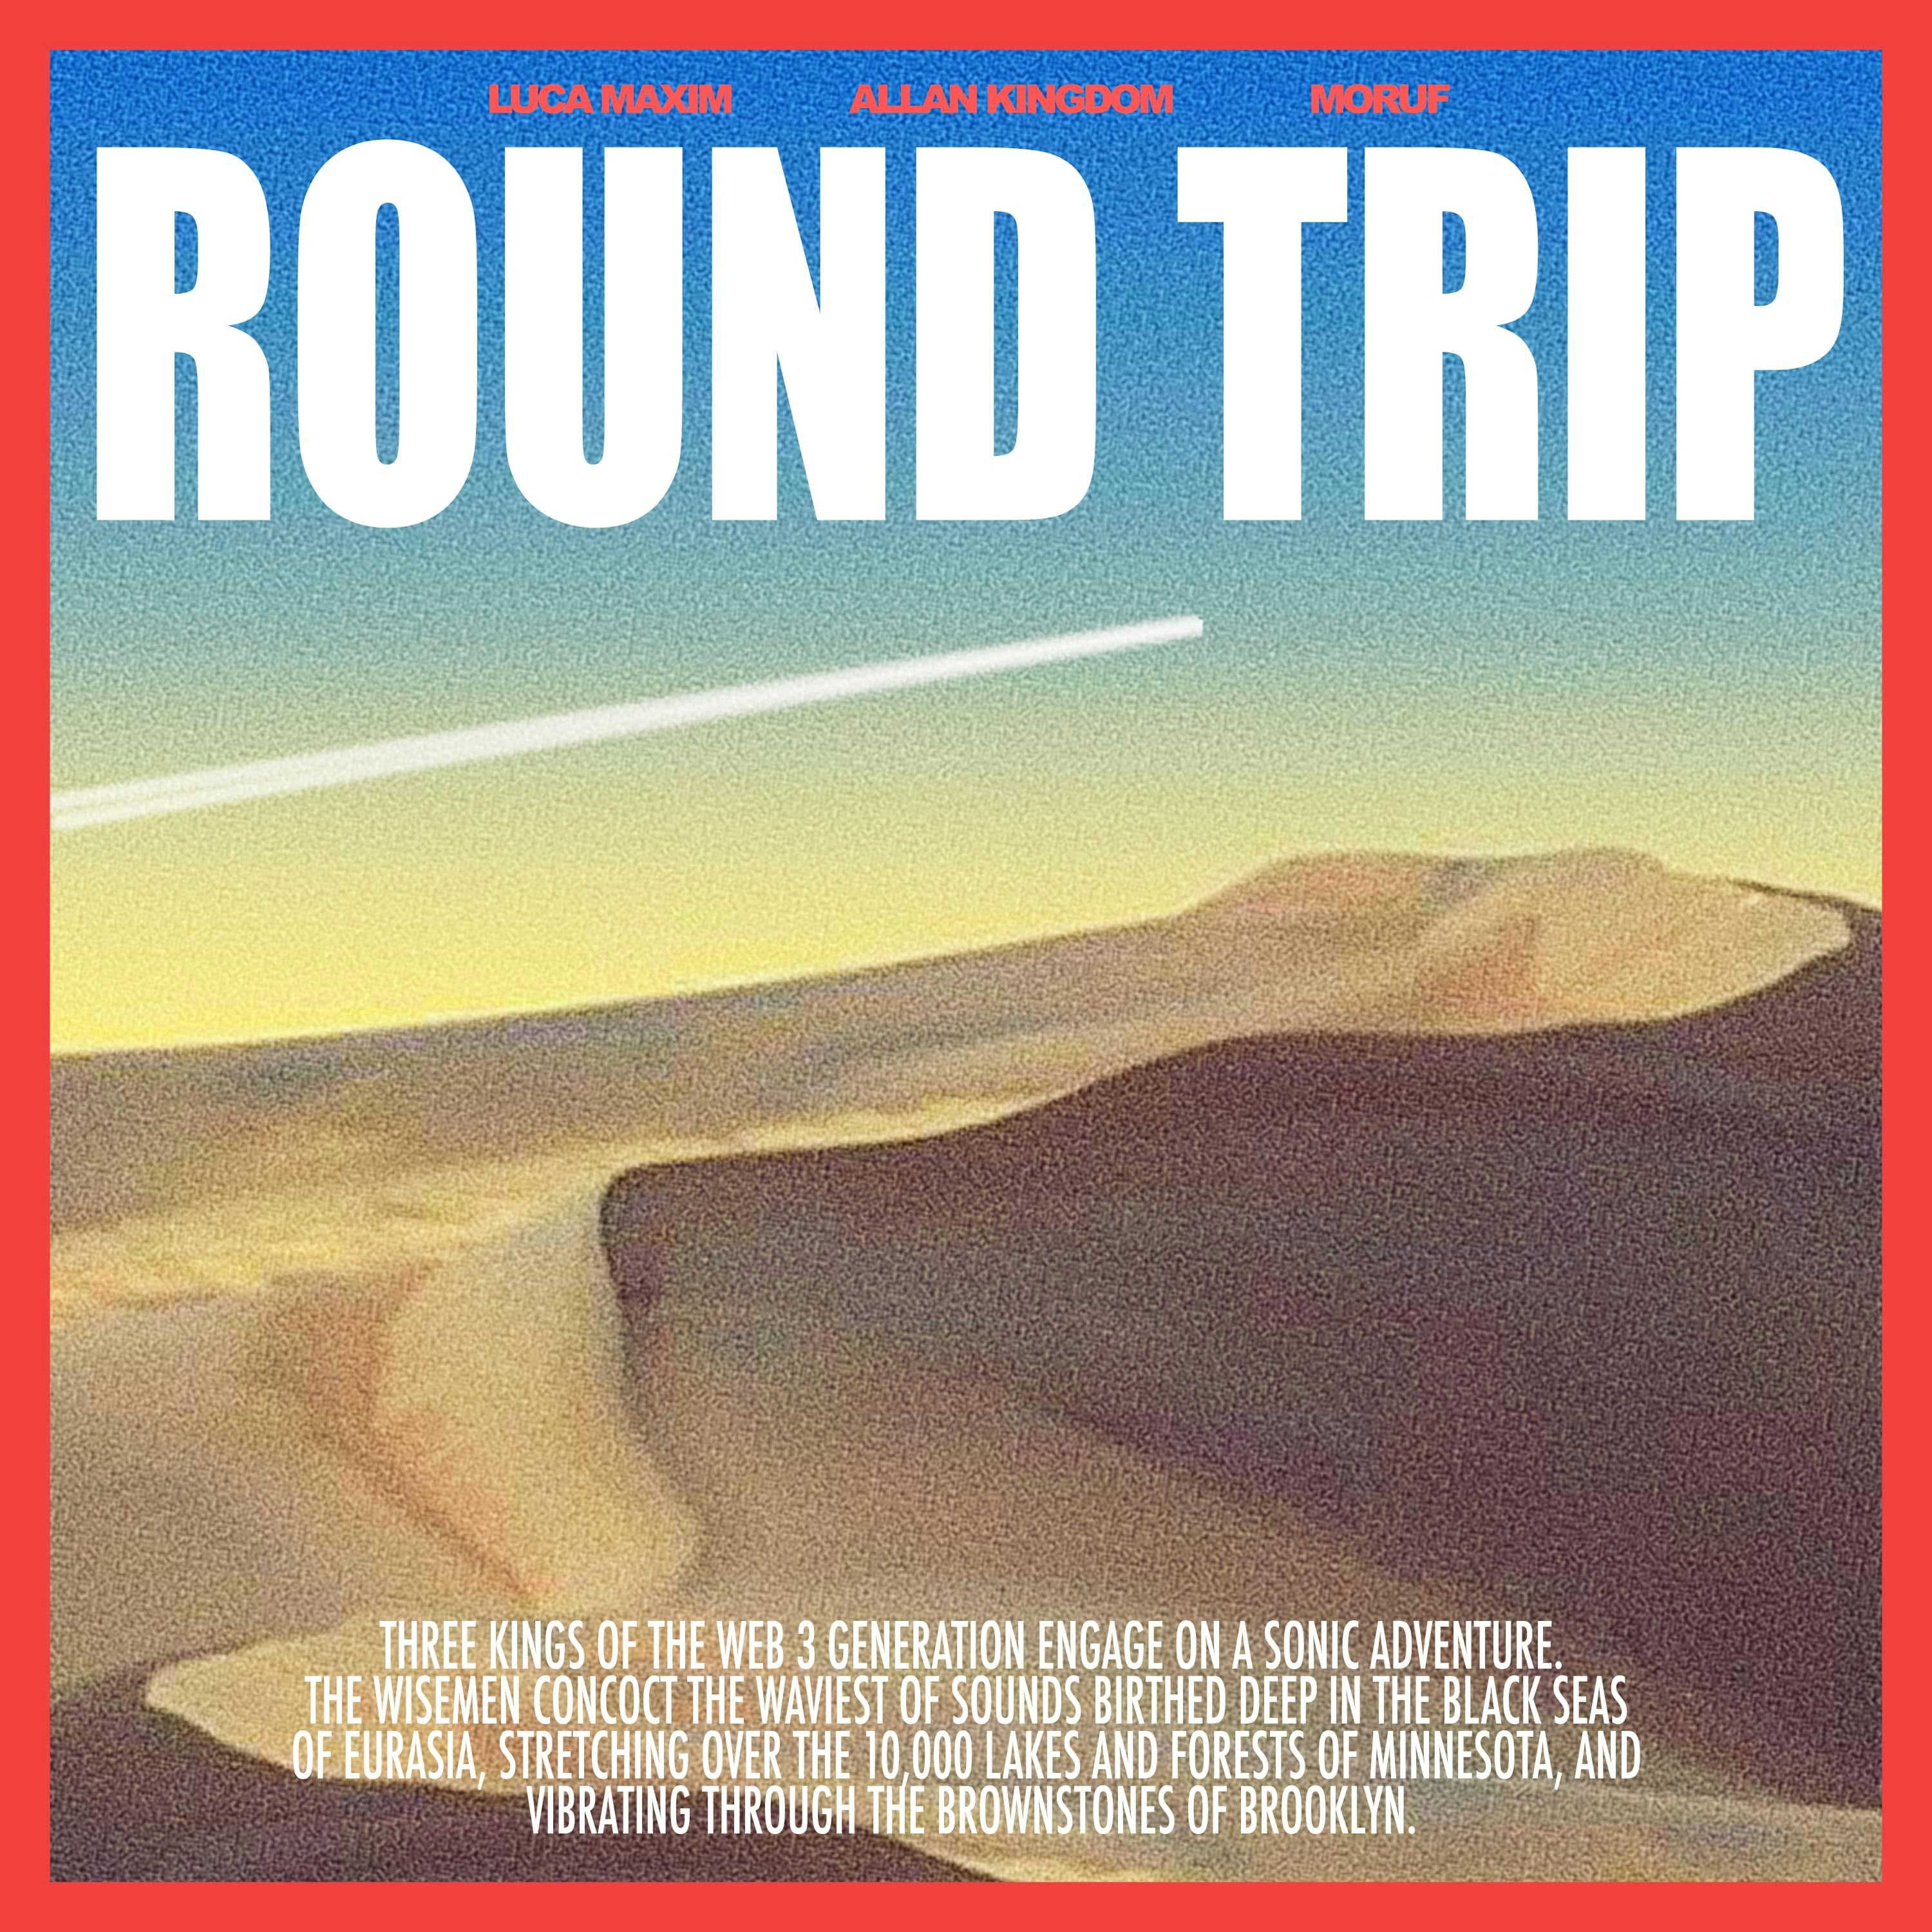 Cover art for Round Trip w/ Luca Maxim & MoRuf by Allan Kingdom